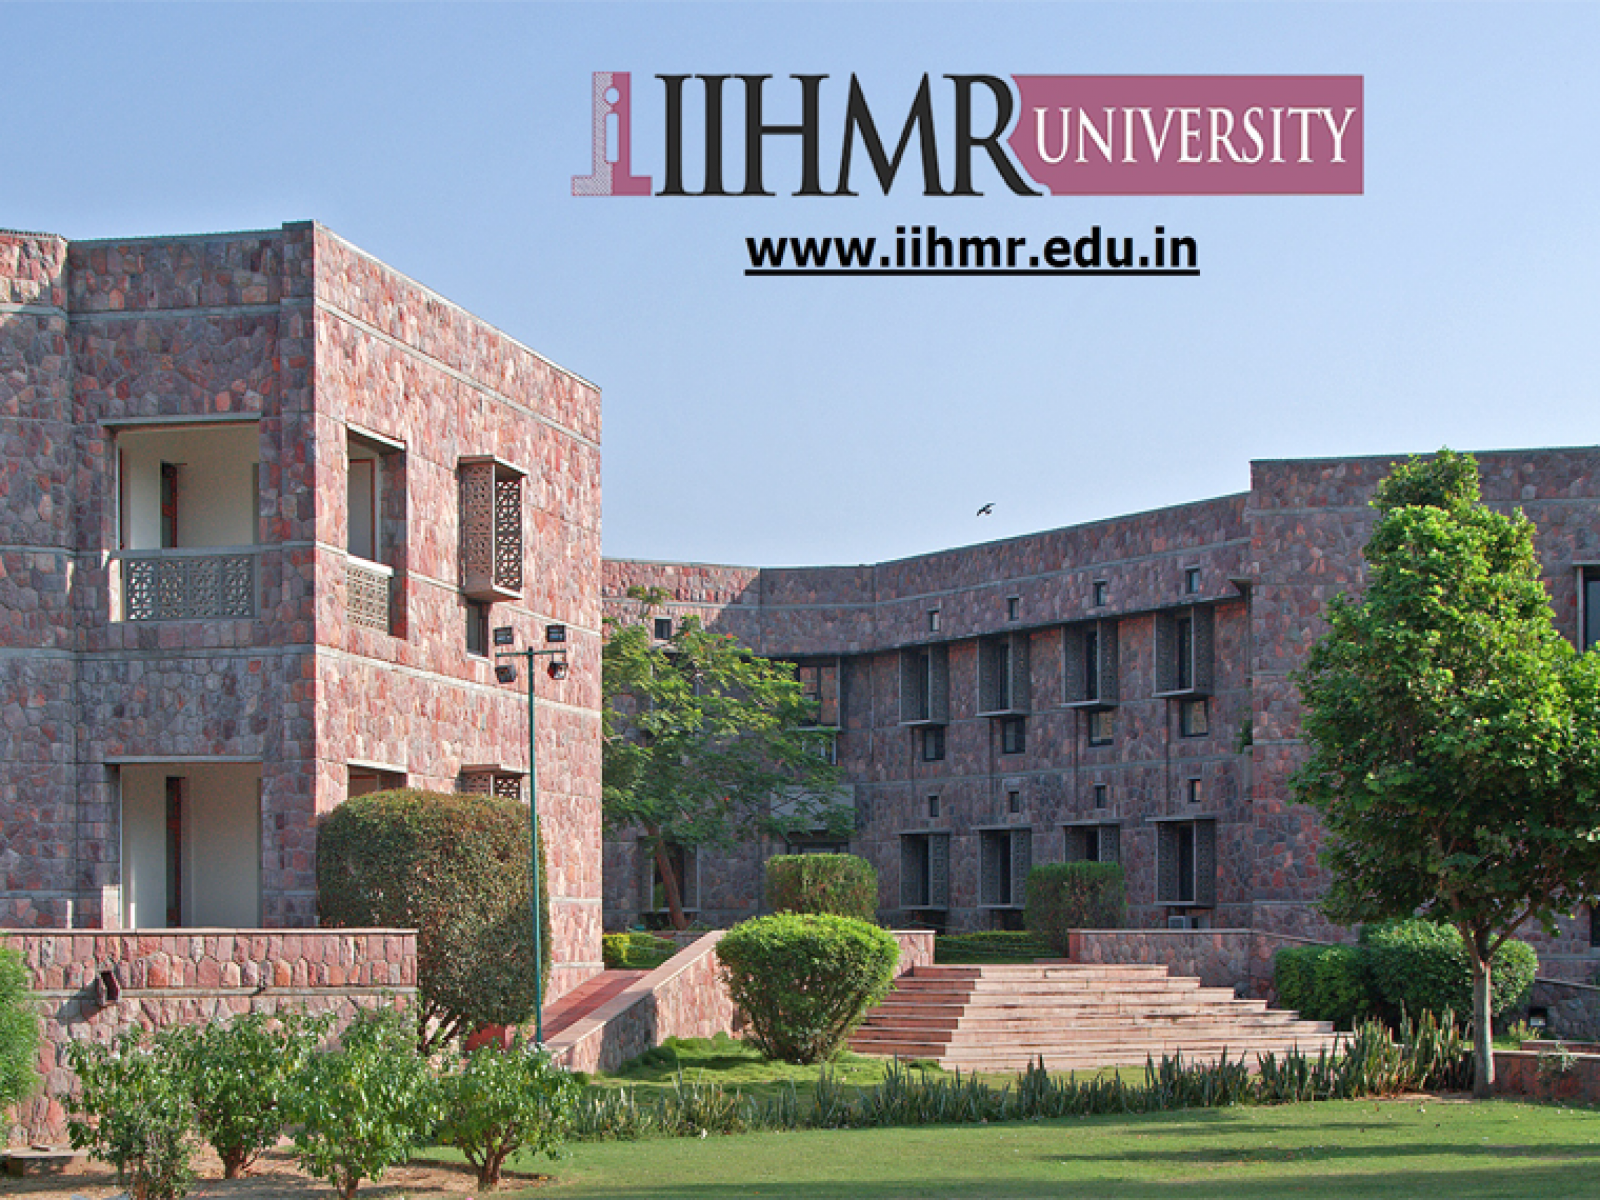 The Iihmr University